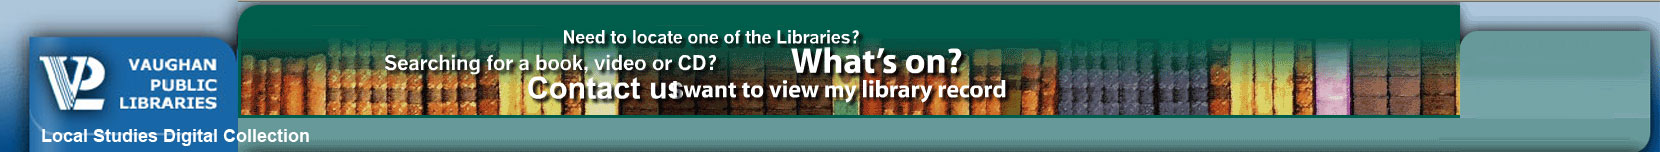 Vaughan Public Libraries Local Studies